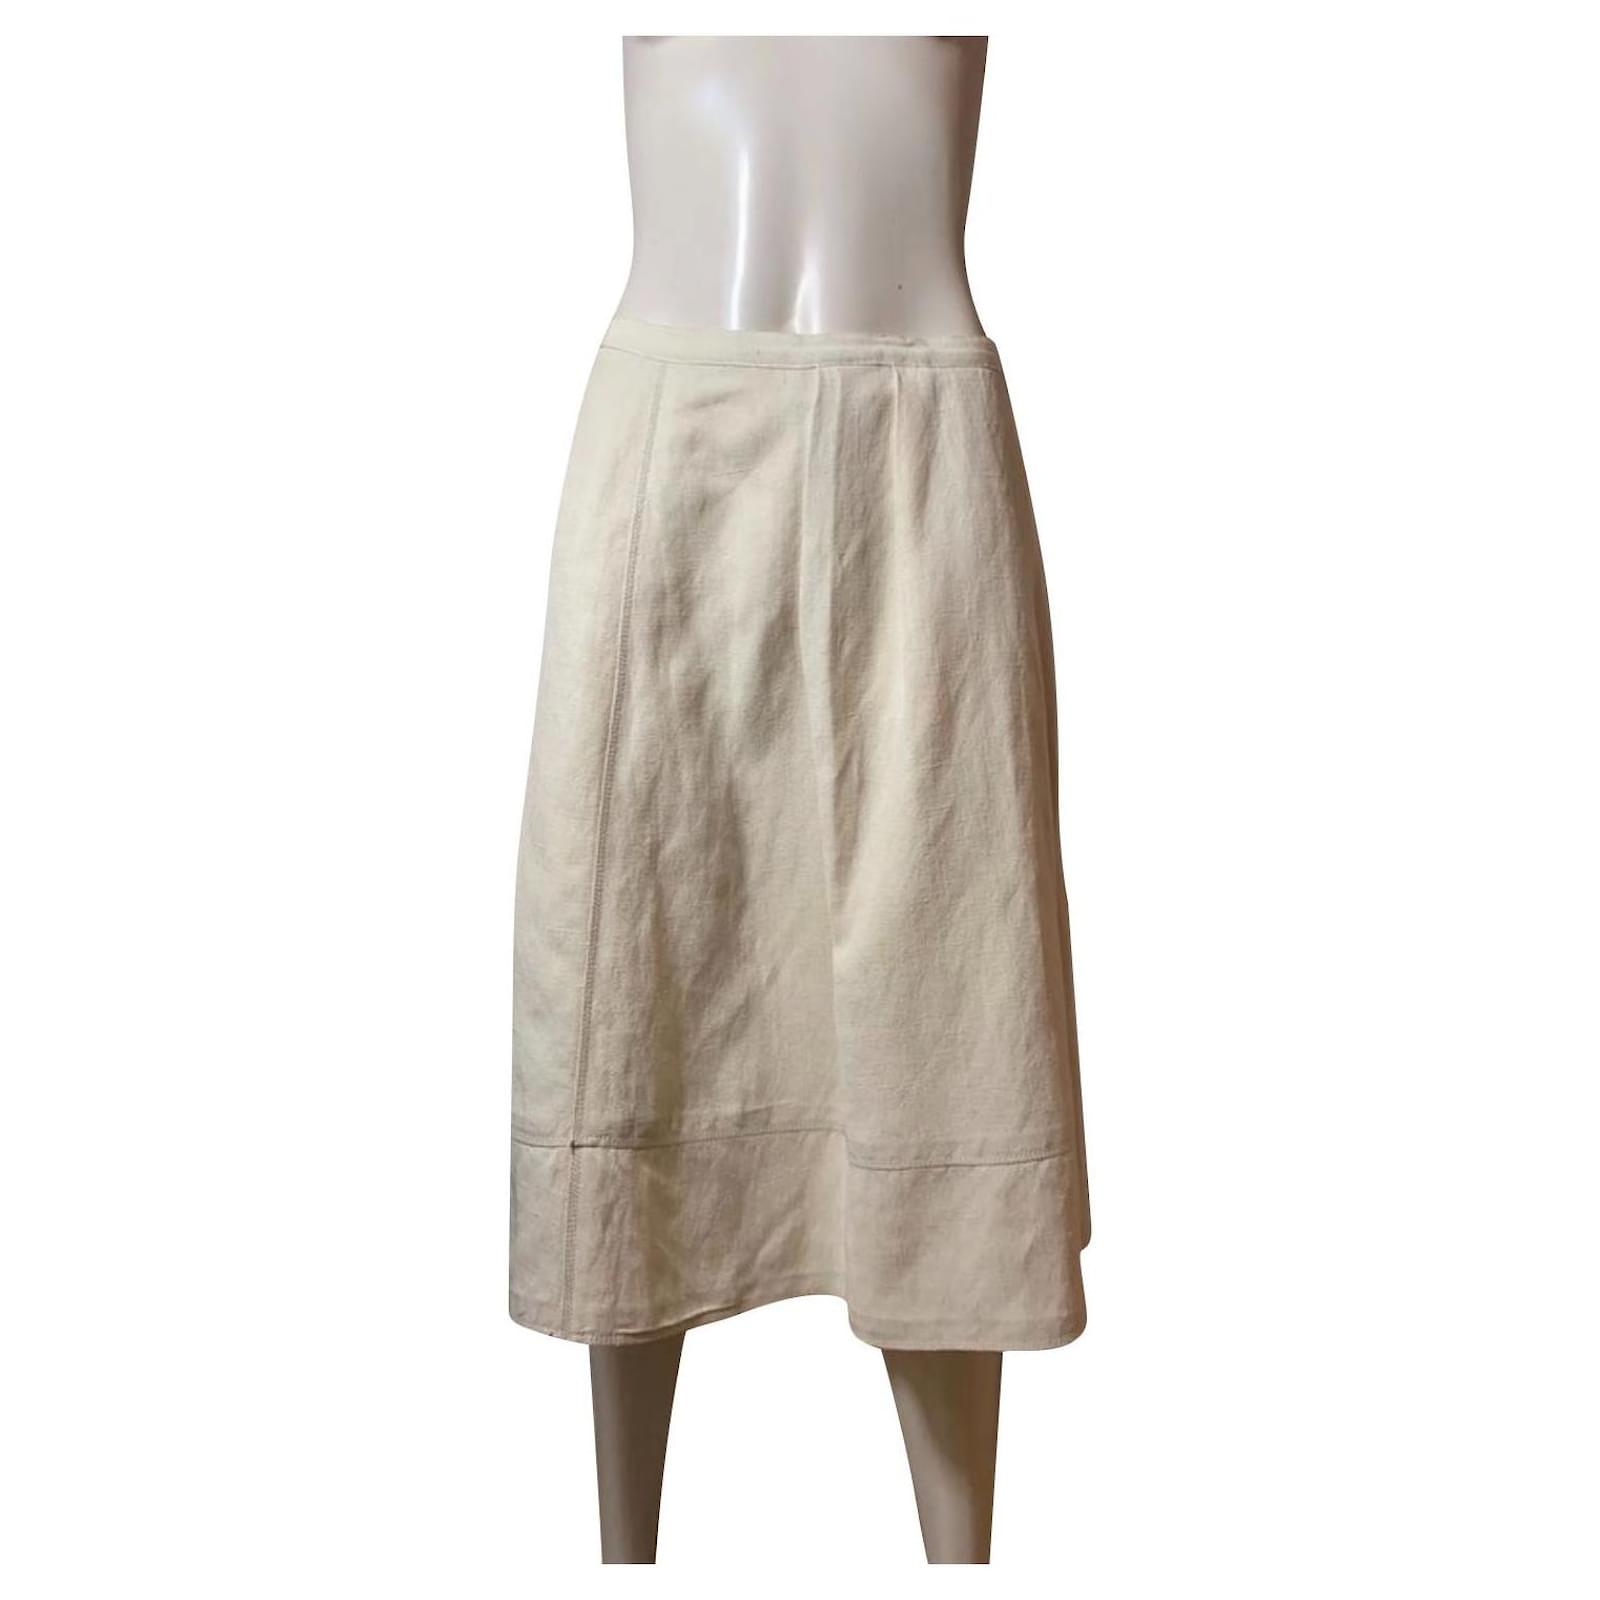 louis Vuitton monogram skirt size 38